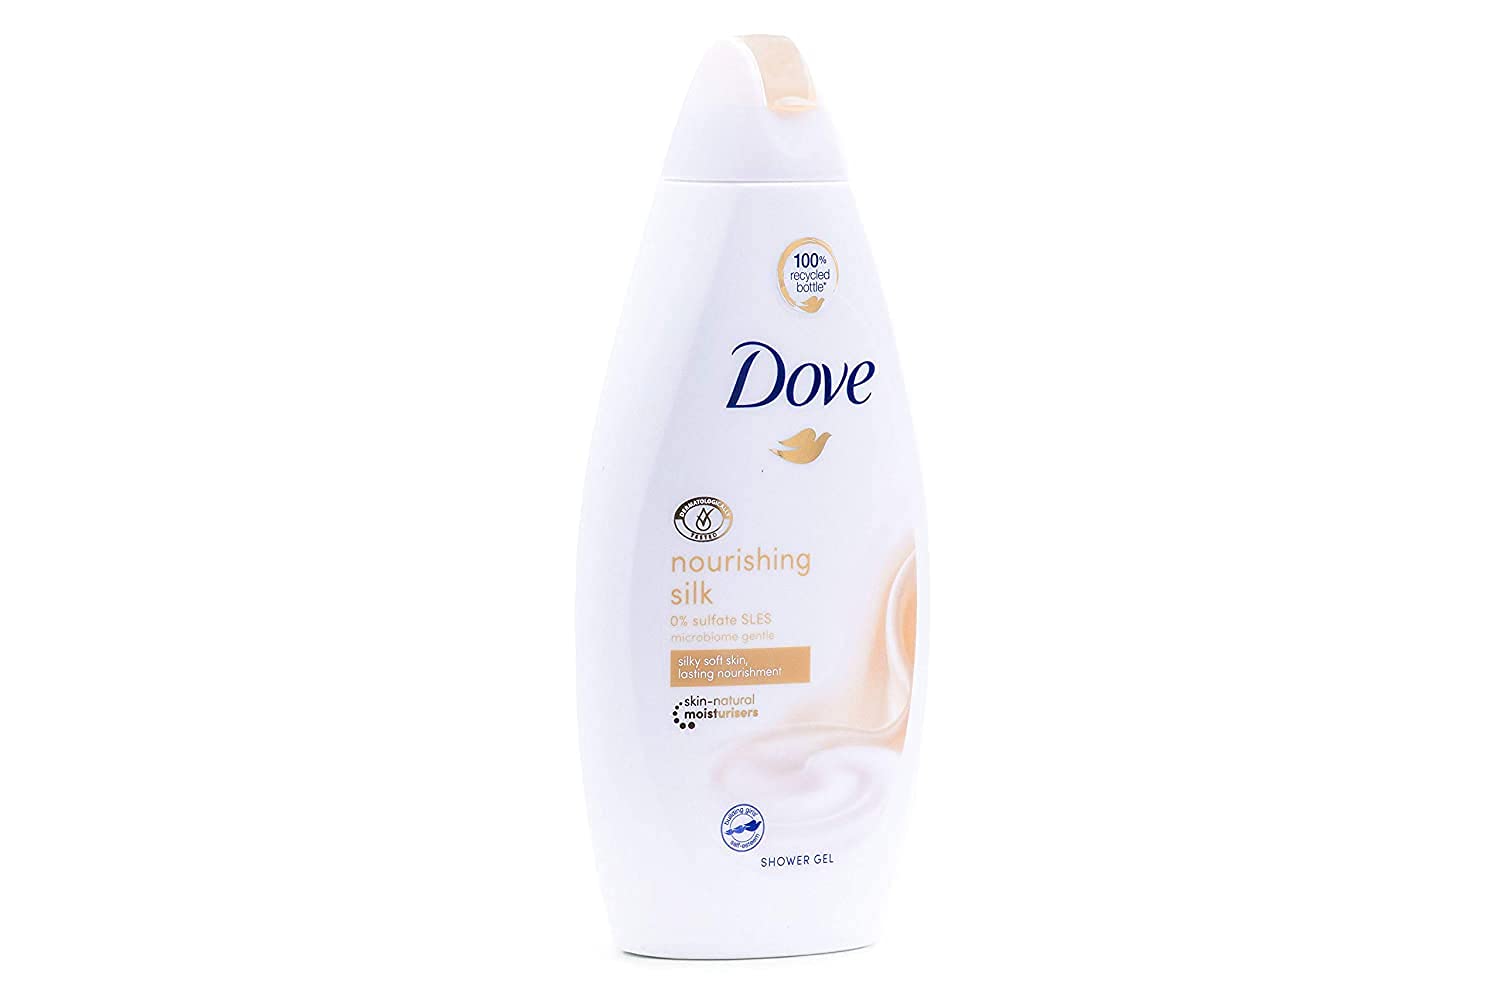 Dove Body Wash Variety - Shea Butter, Deep Moisture, Pistachio Cream, Coconut Milk, Gentle Exfoliating and Silk Glow, 16.9oz Each International Version ,16.9Oz, 6 Count (Pack of 1)